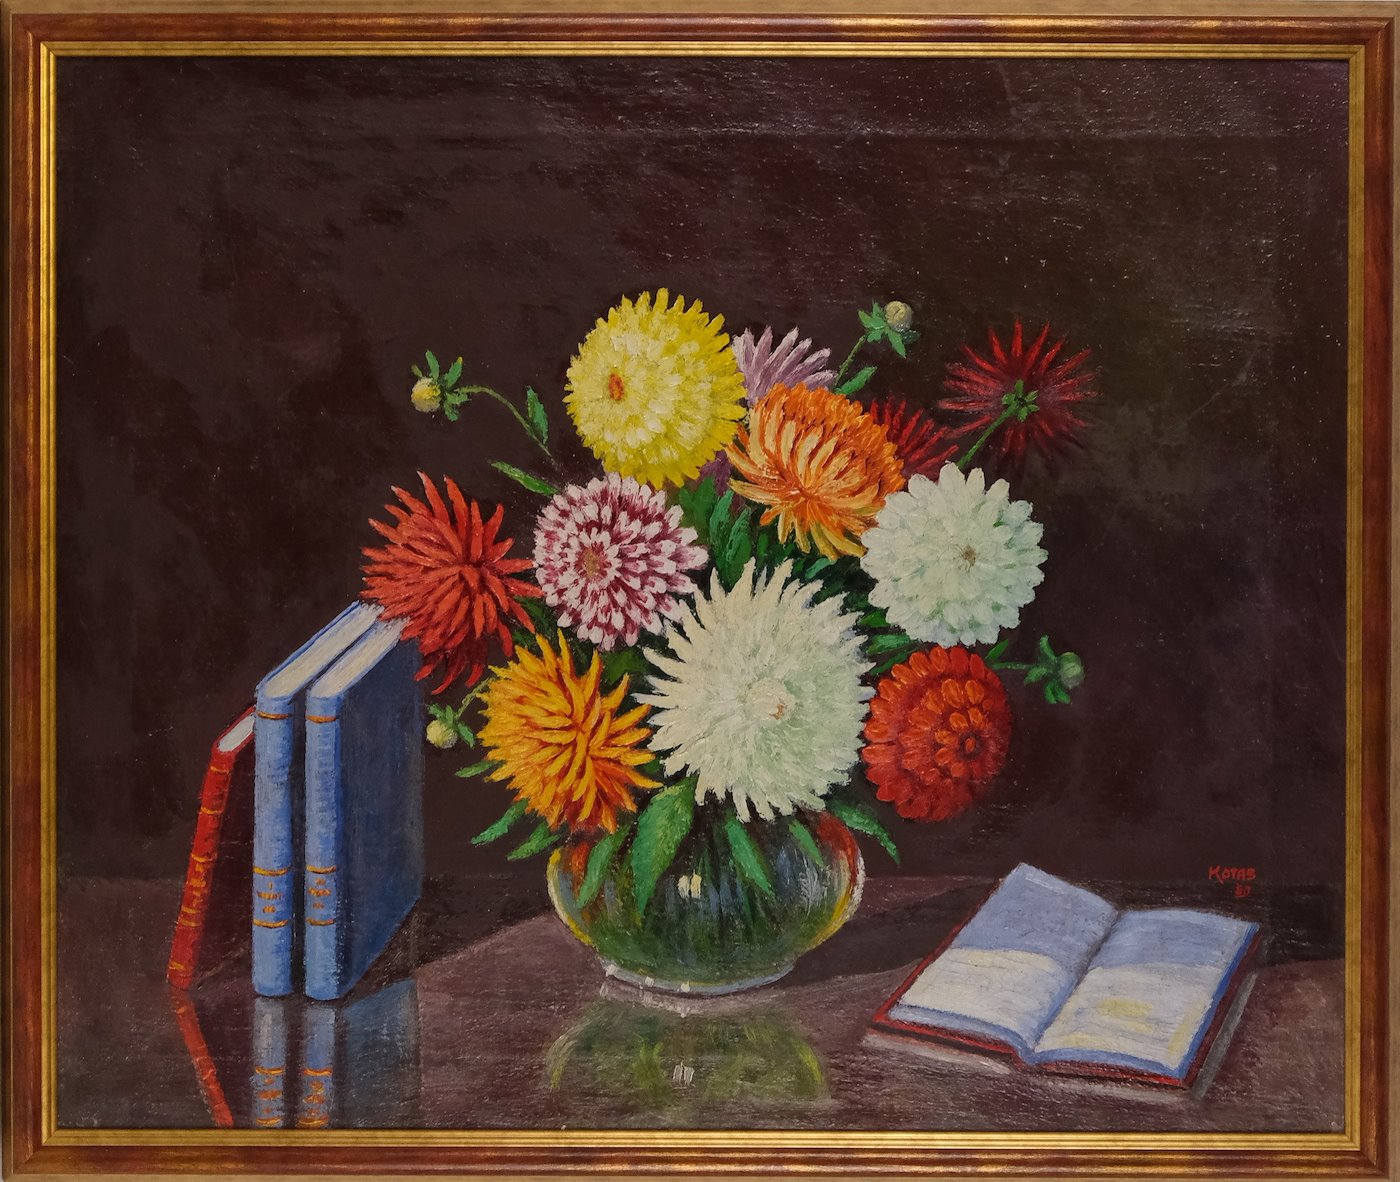 Kotas - Zátiší s květinami a knihami